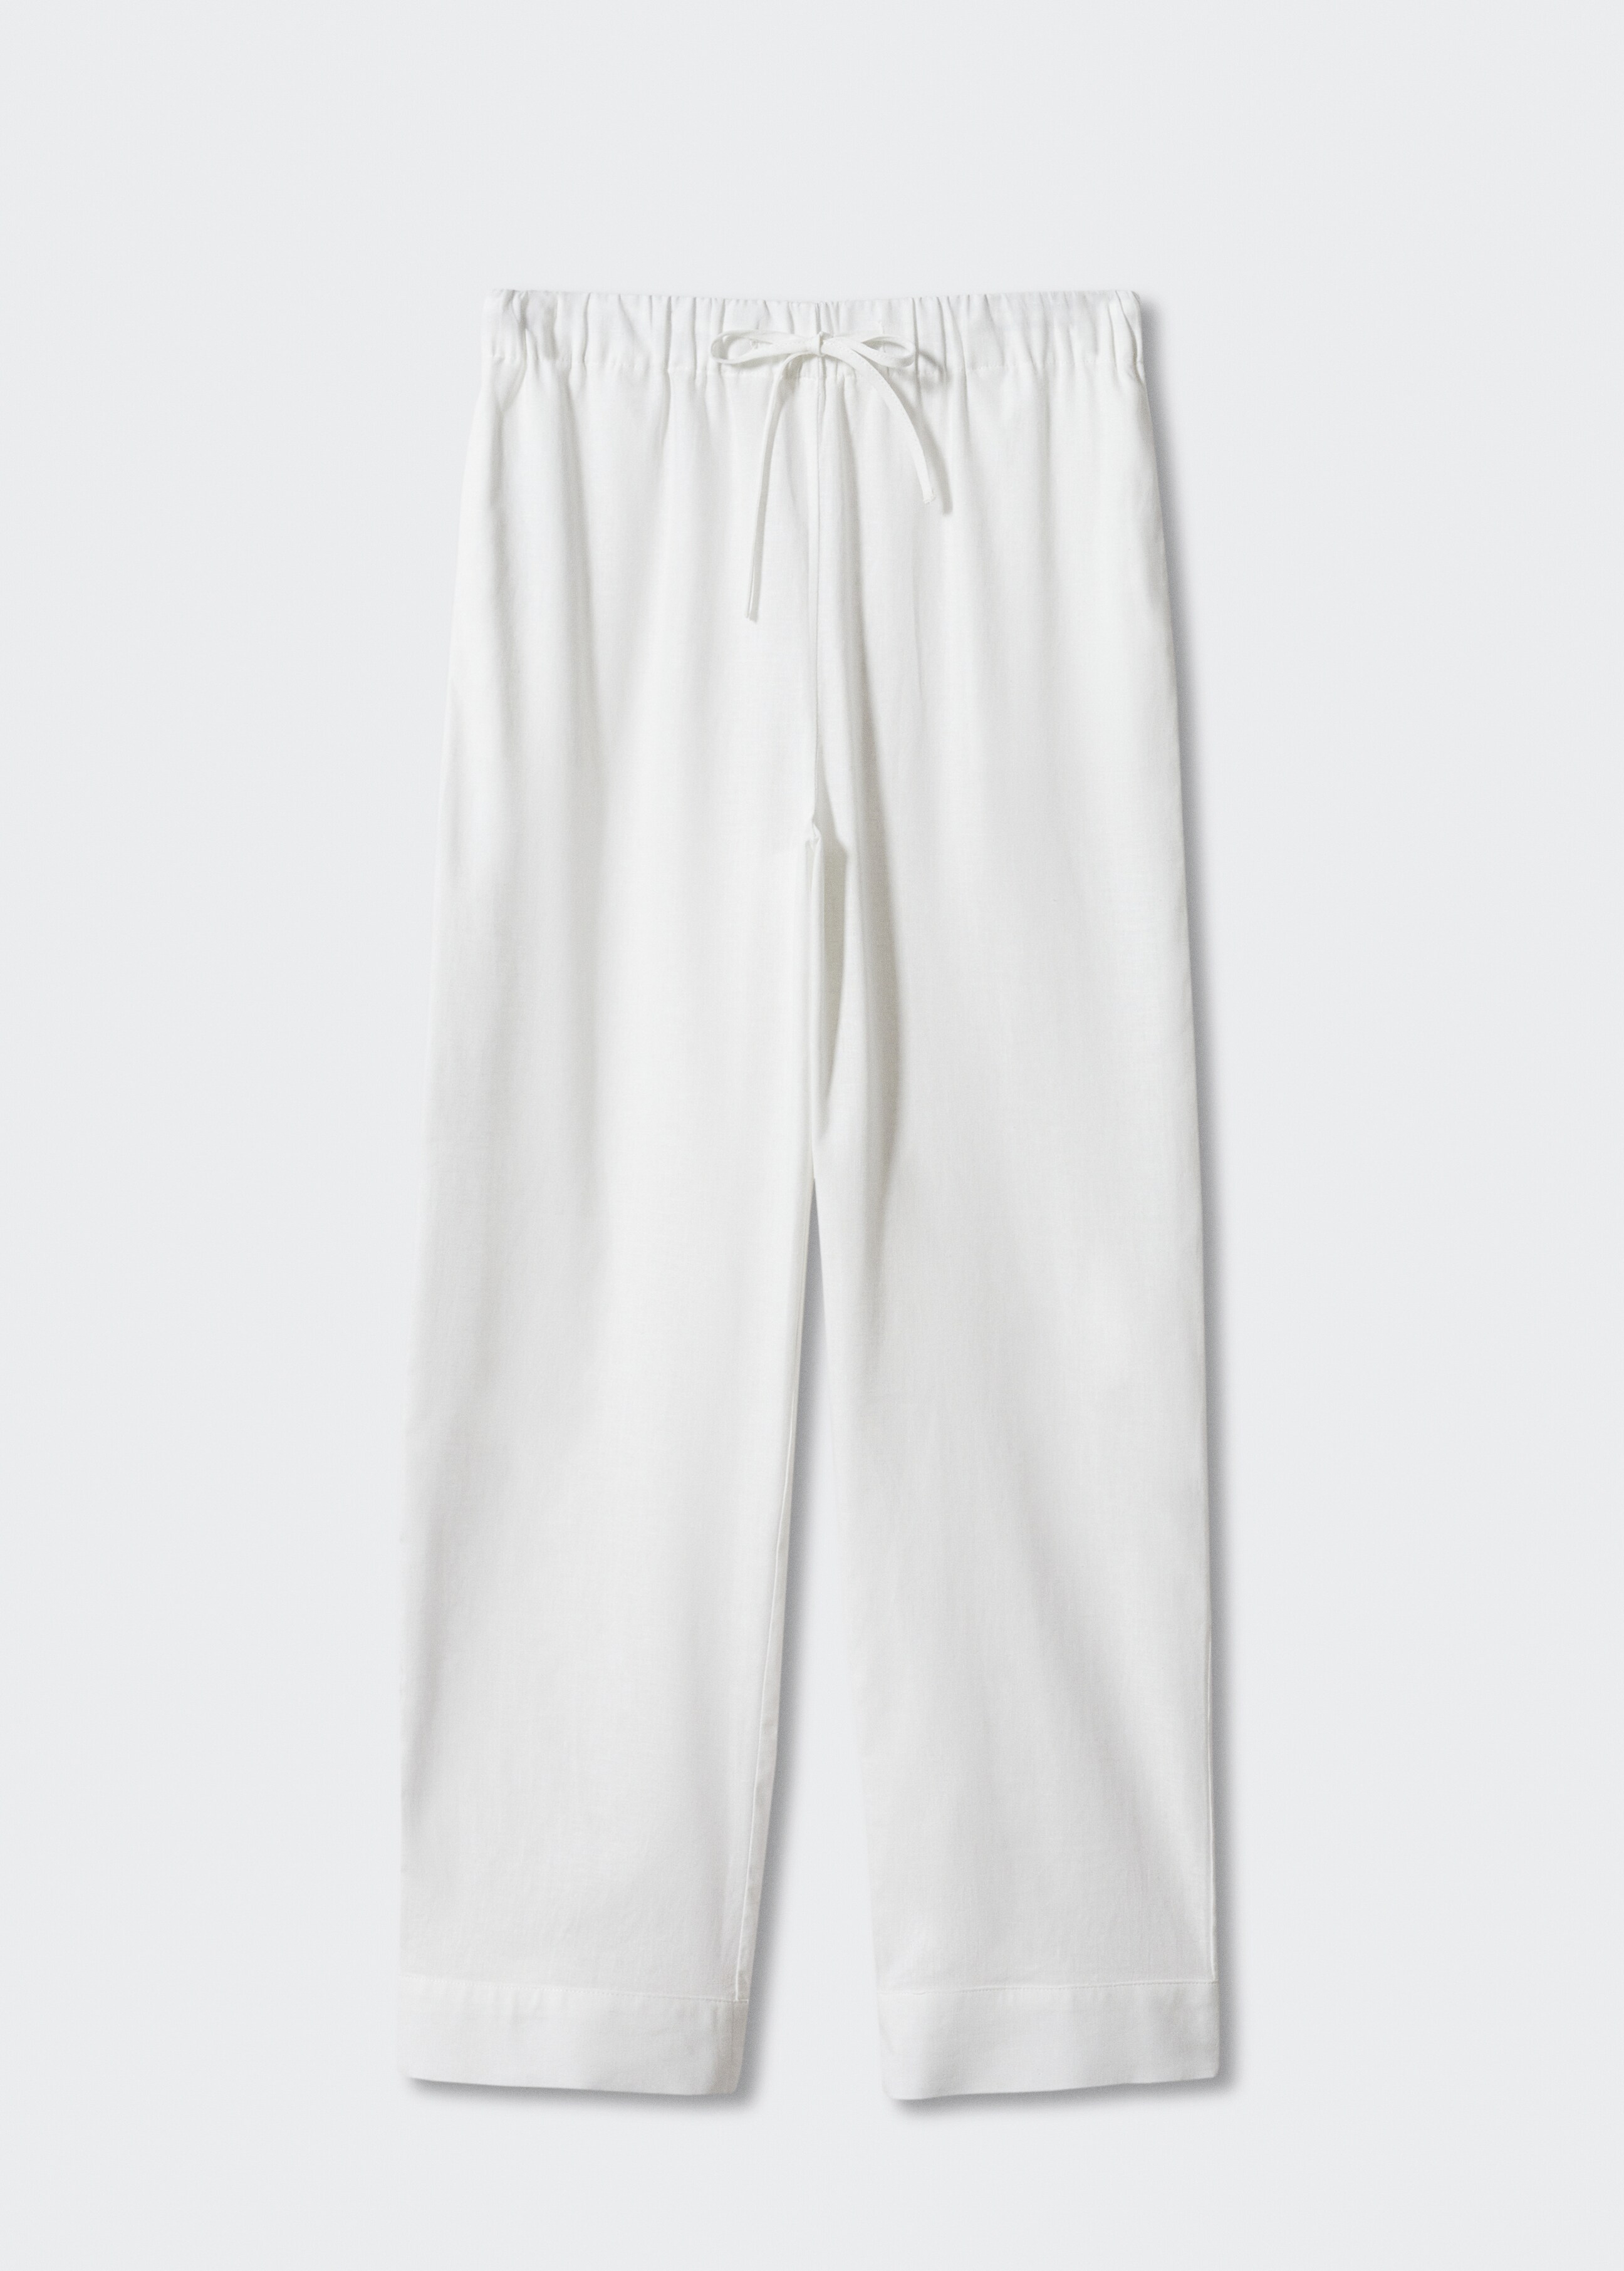 Pantalón pijama lino - Artículo sin modelo